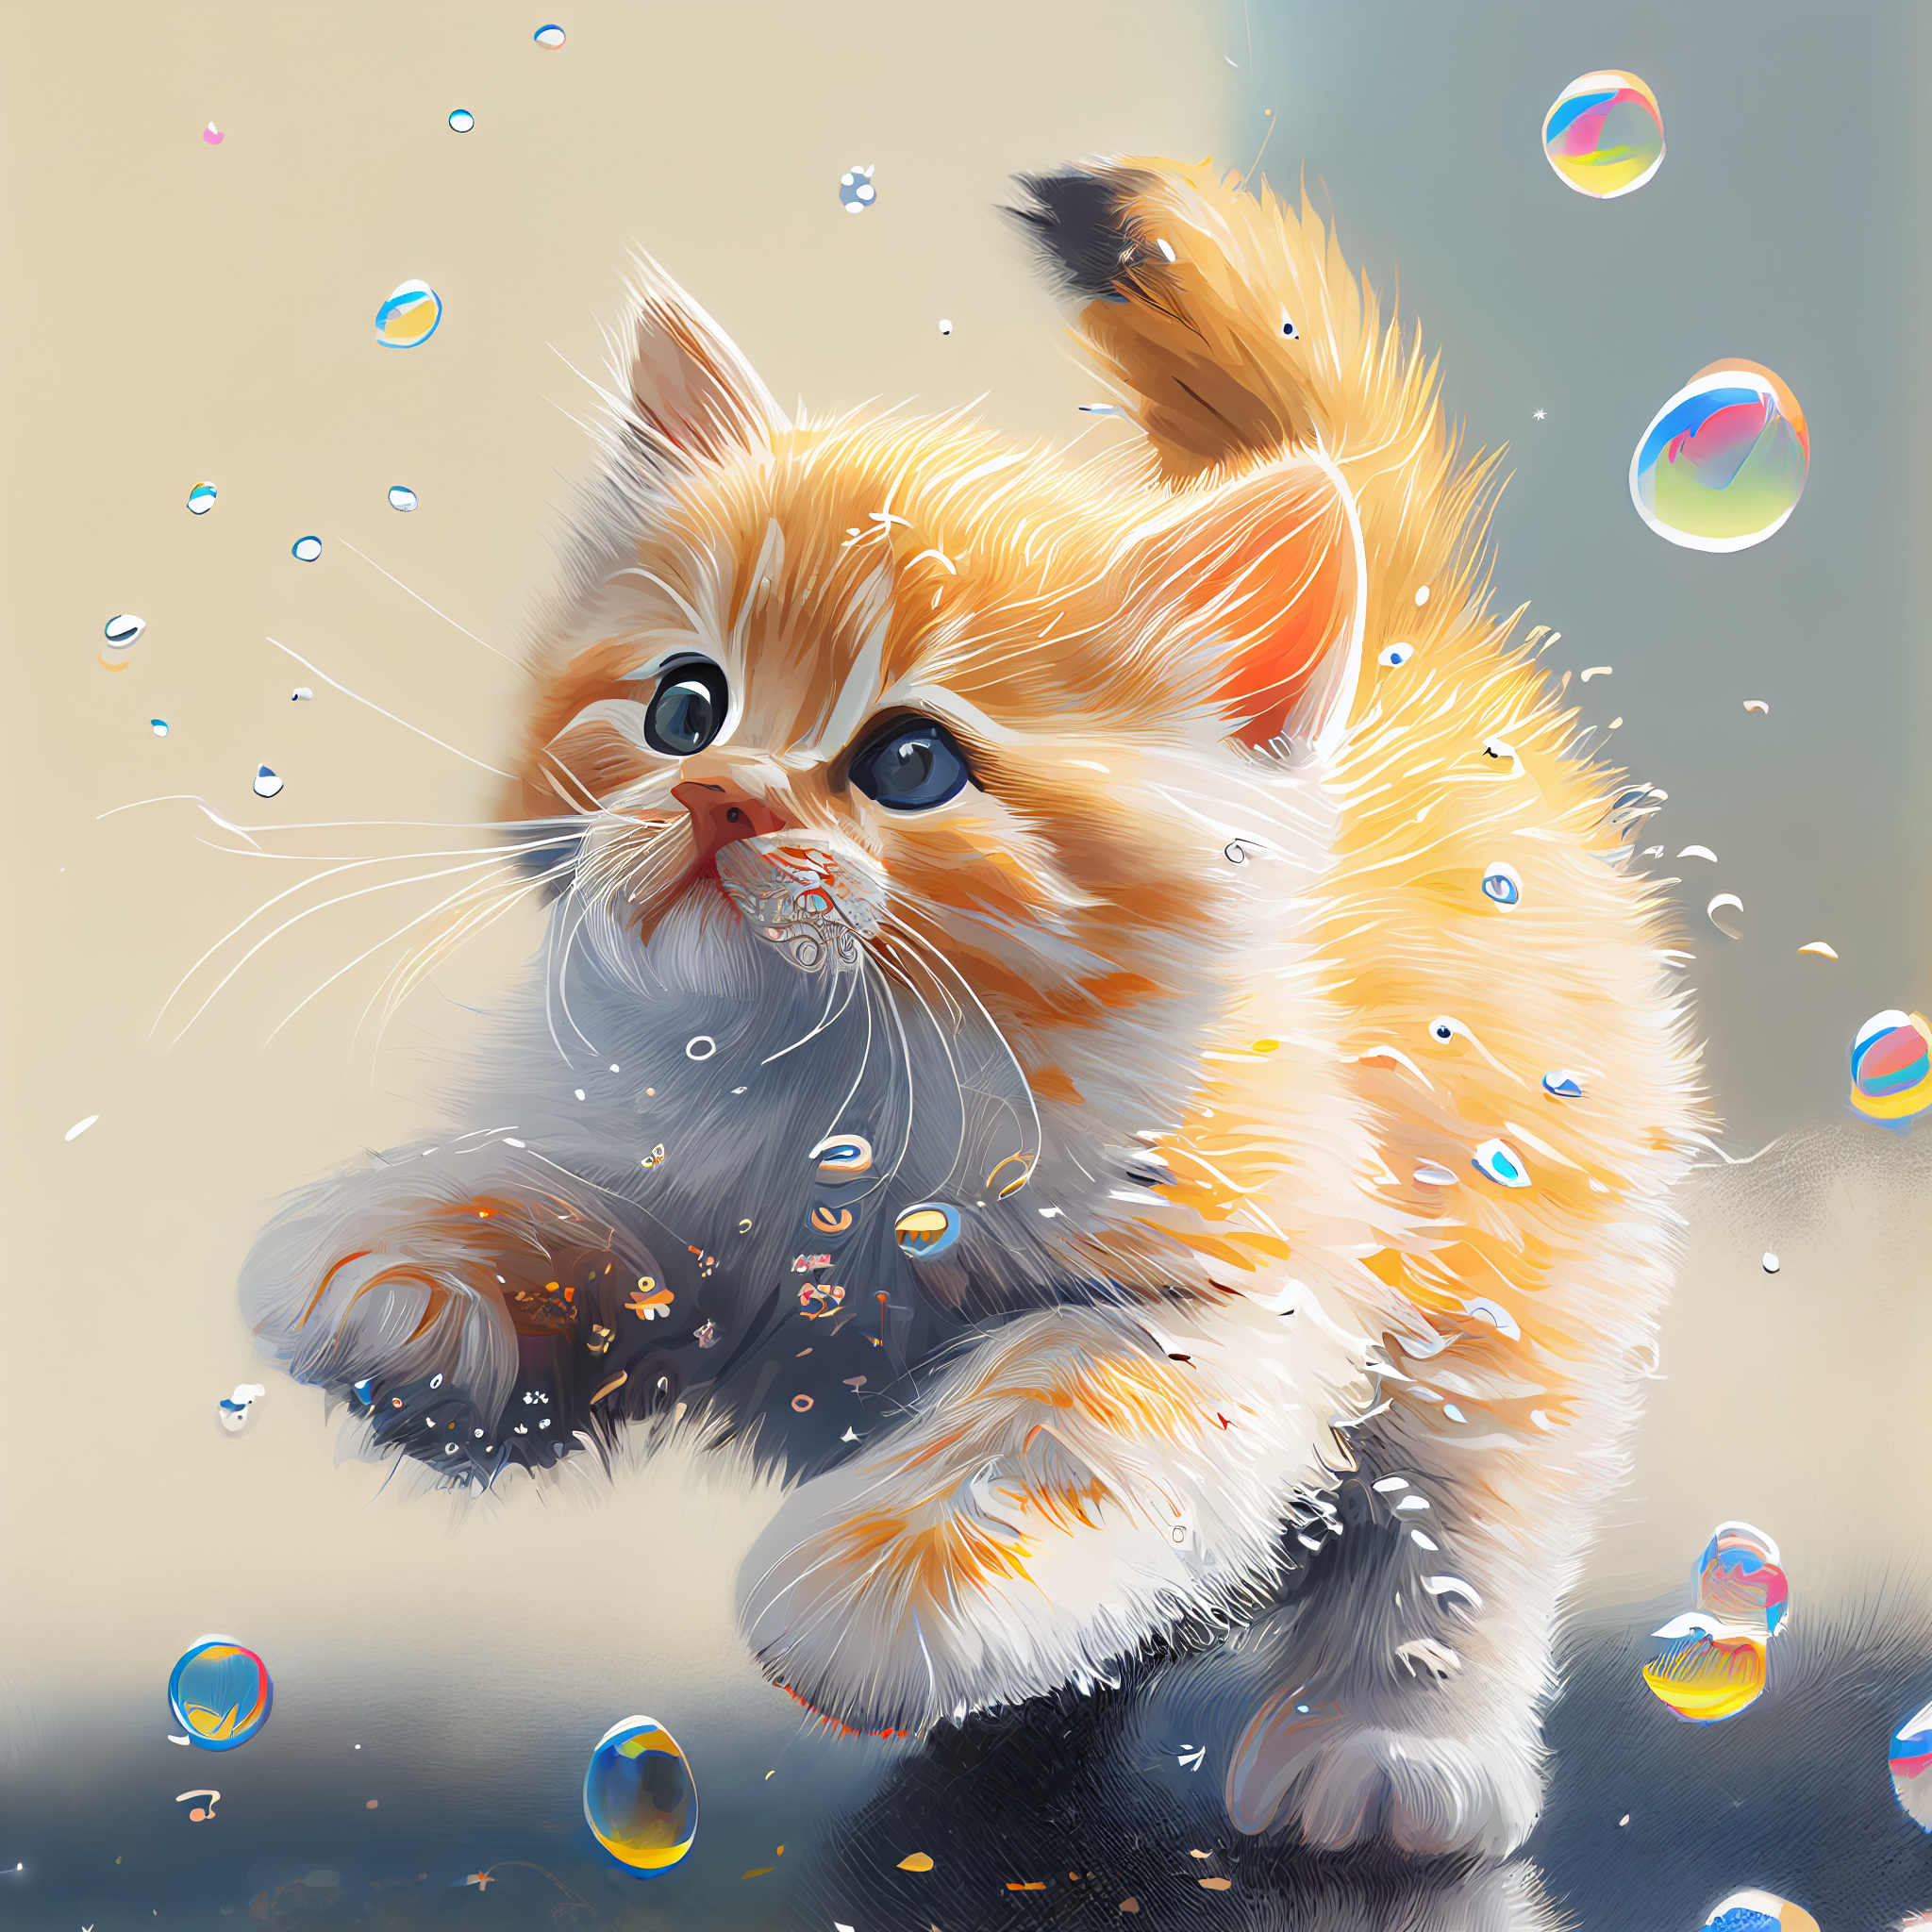 Whimsical Playtime: An Adorable Acrylic Print of a Playful Kitten for Kids' Nursery Wall Decor